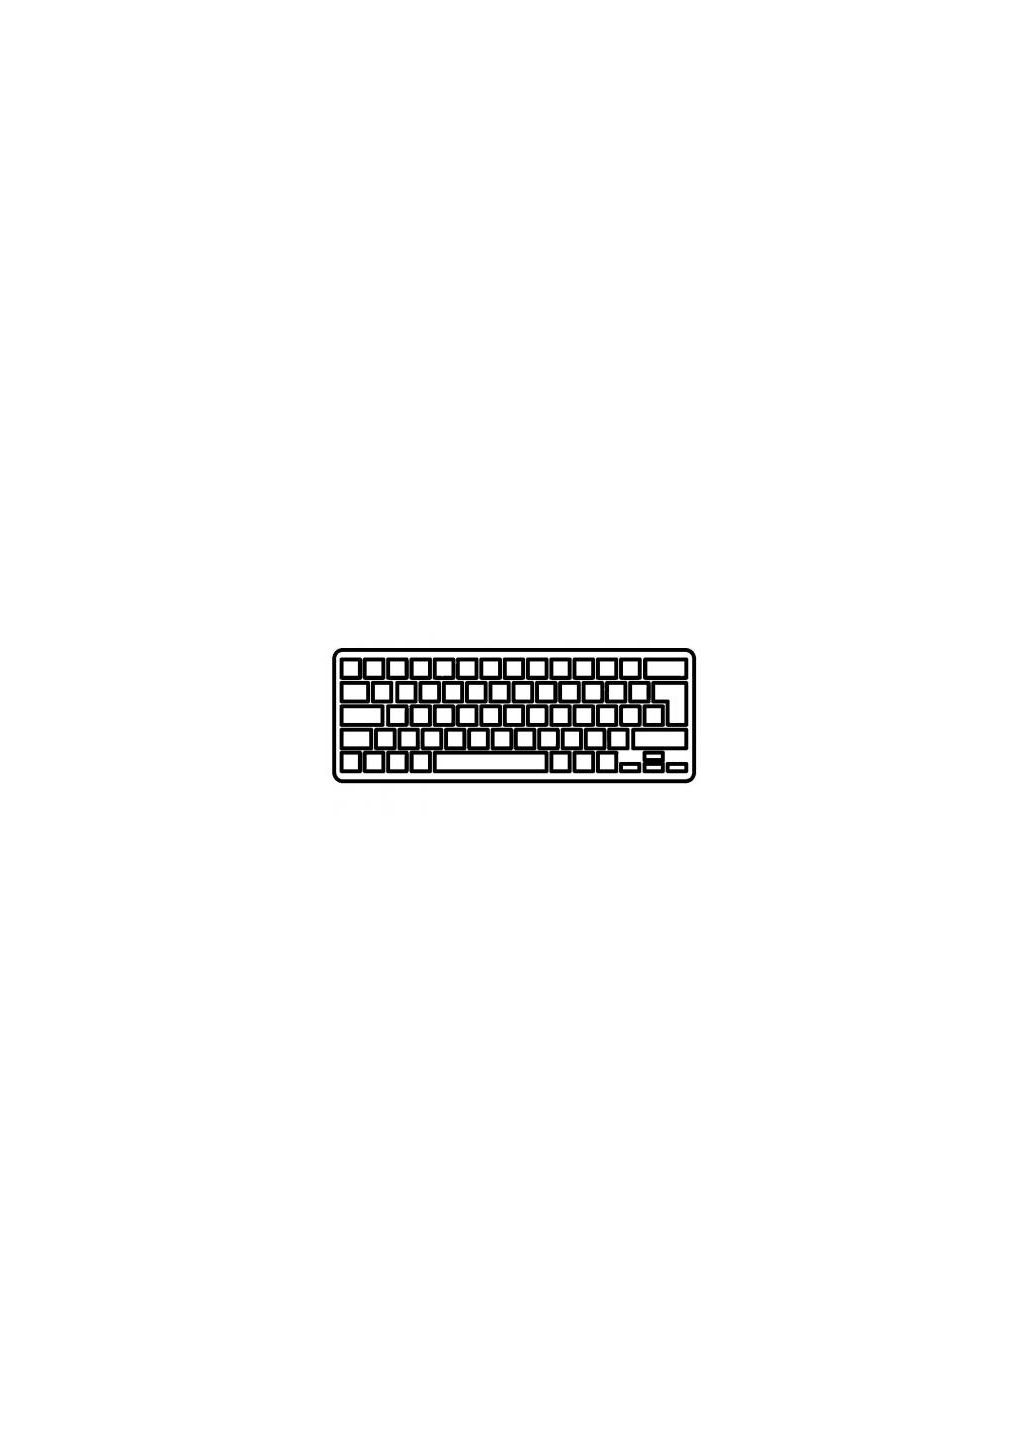 Клавиатура ноутбука VivoBook X556,X756 black,wo/frame,RU/US (A46002) Asus vivobook x556, x756 black, wo/frame, ru/us (276706889)